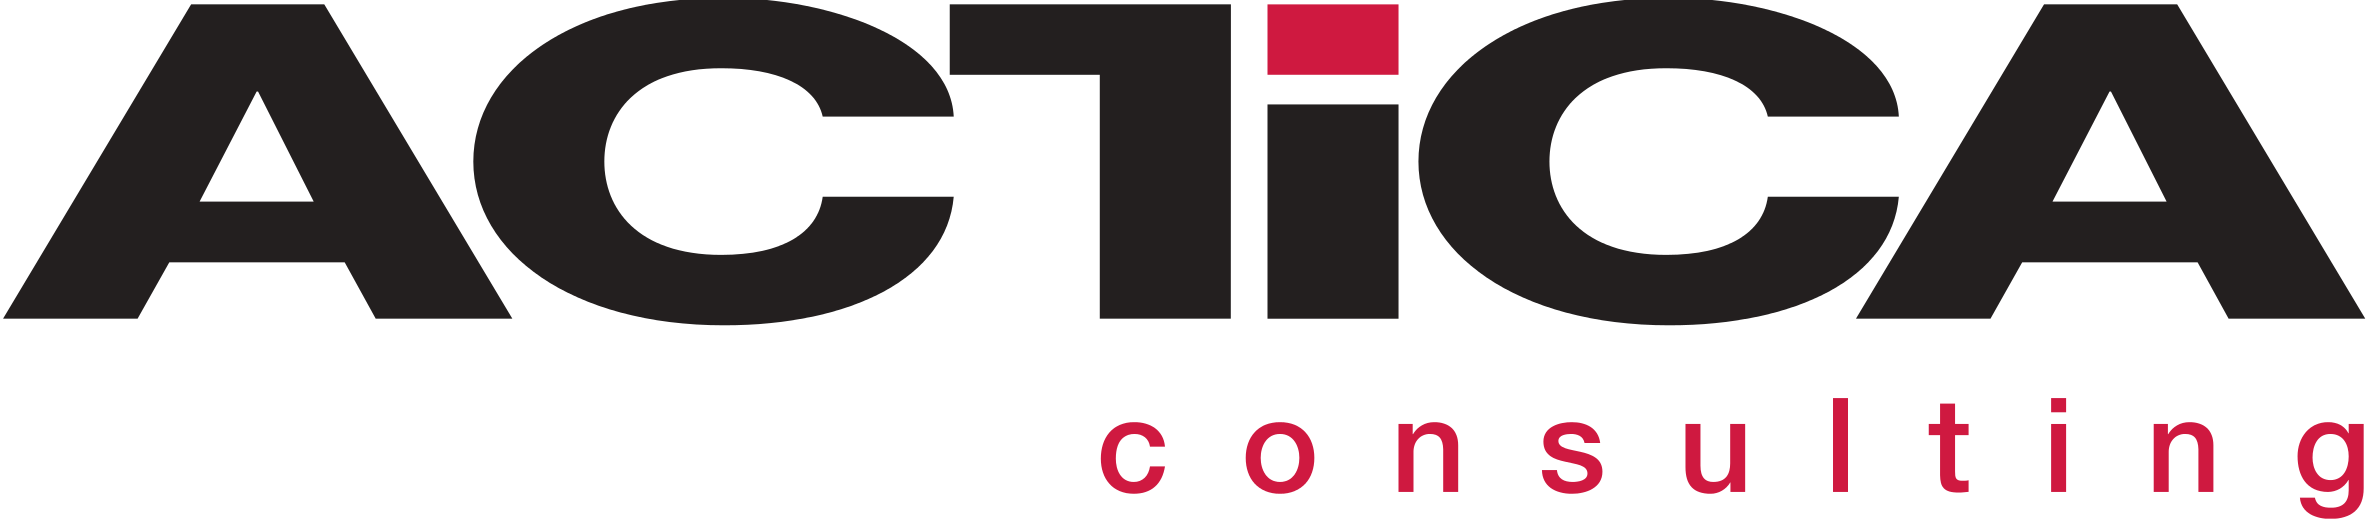 Actica Consulting logo